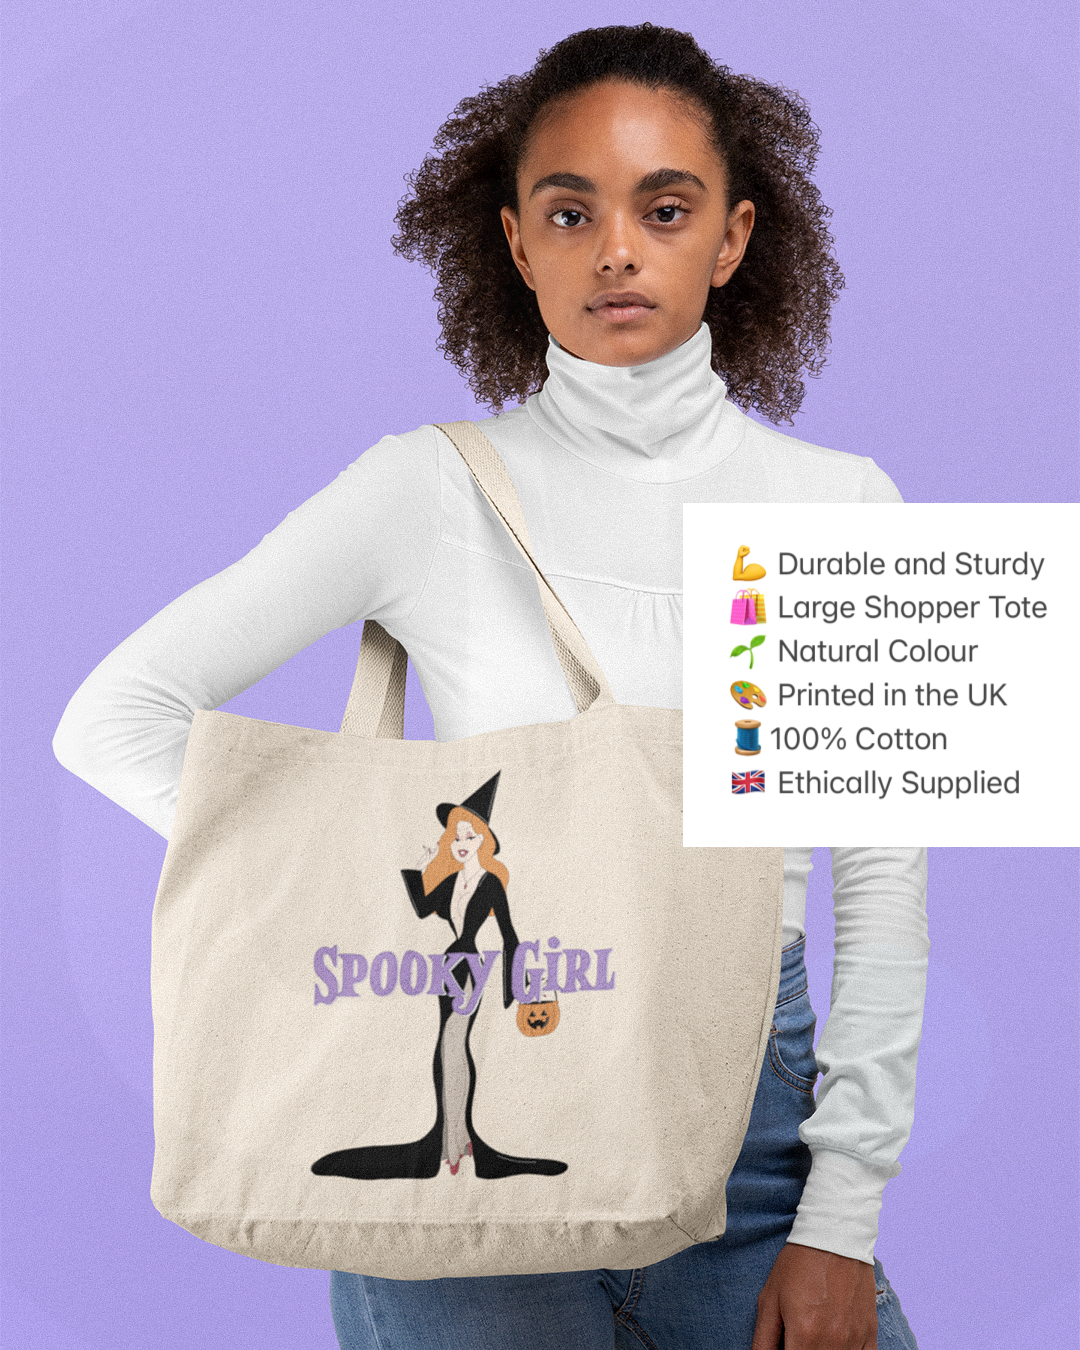 Spooky Girl Pin Up Halloween Tote Bag - Spooky Girl Pin Up Tote Bag - Pin Up Witch Tote Bag - Spooky Sexy Halloween Shopper Tote Bag